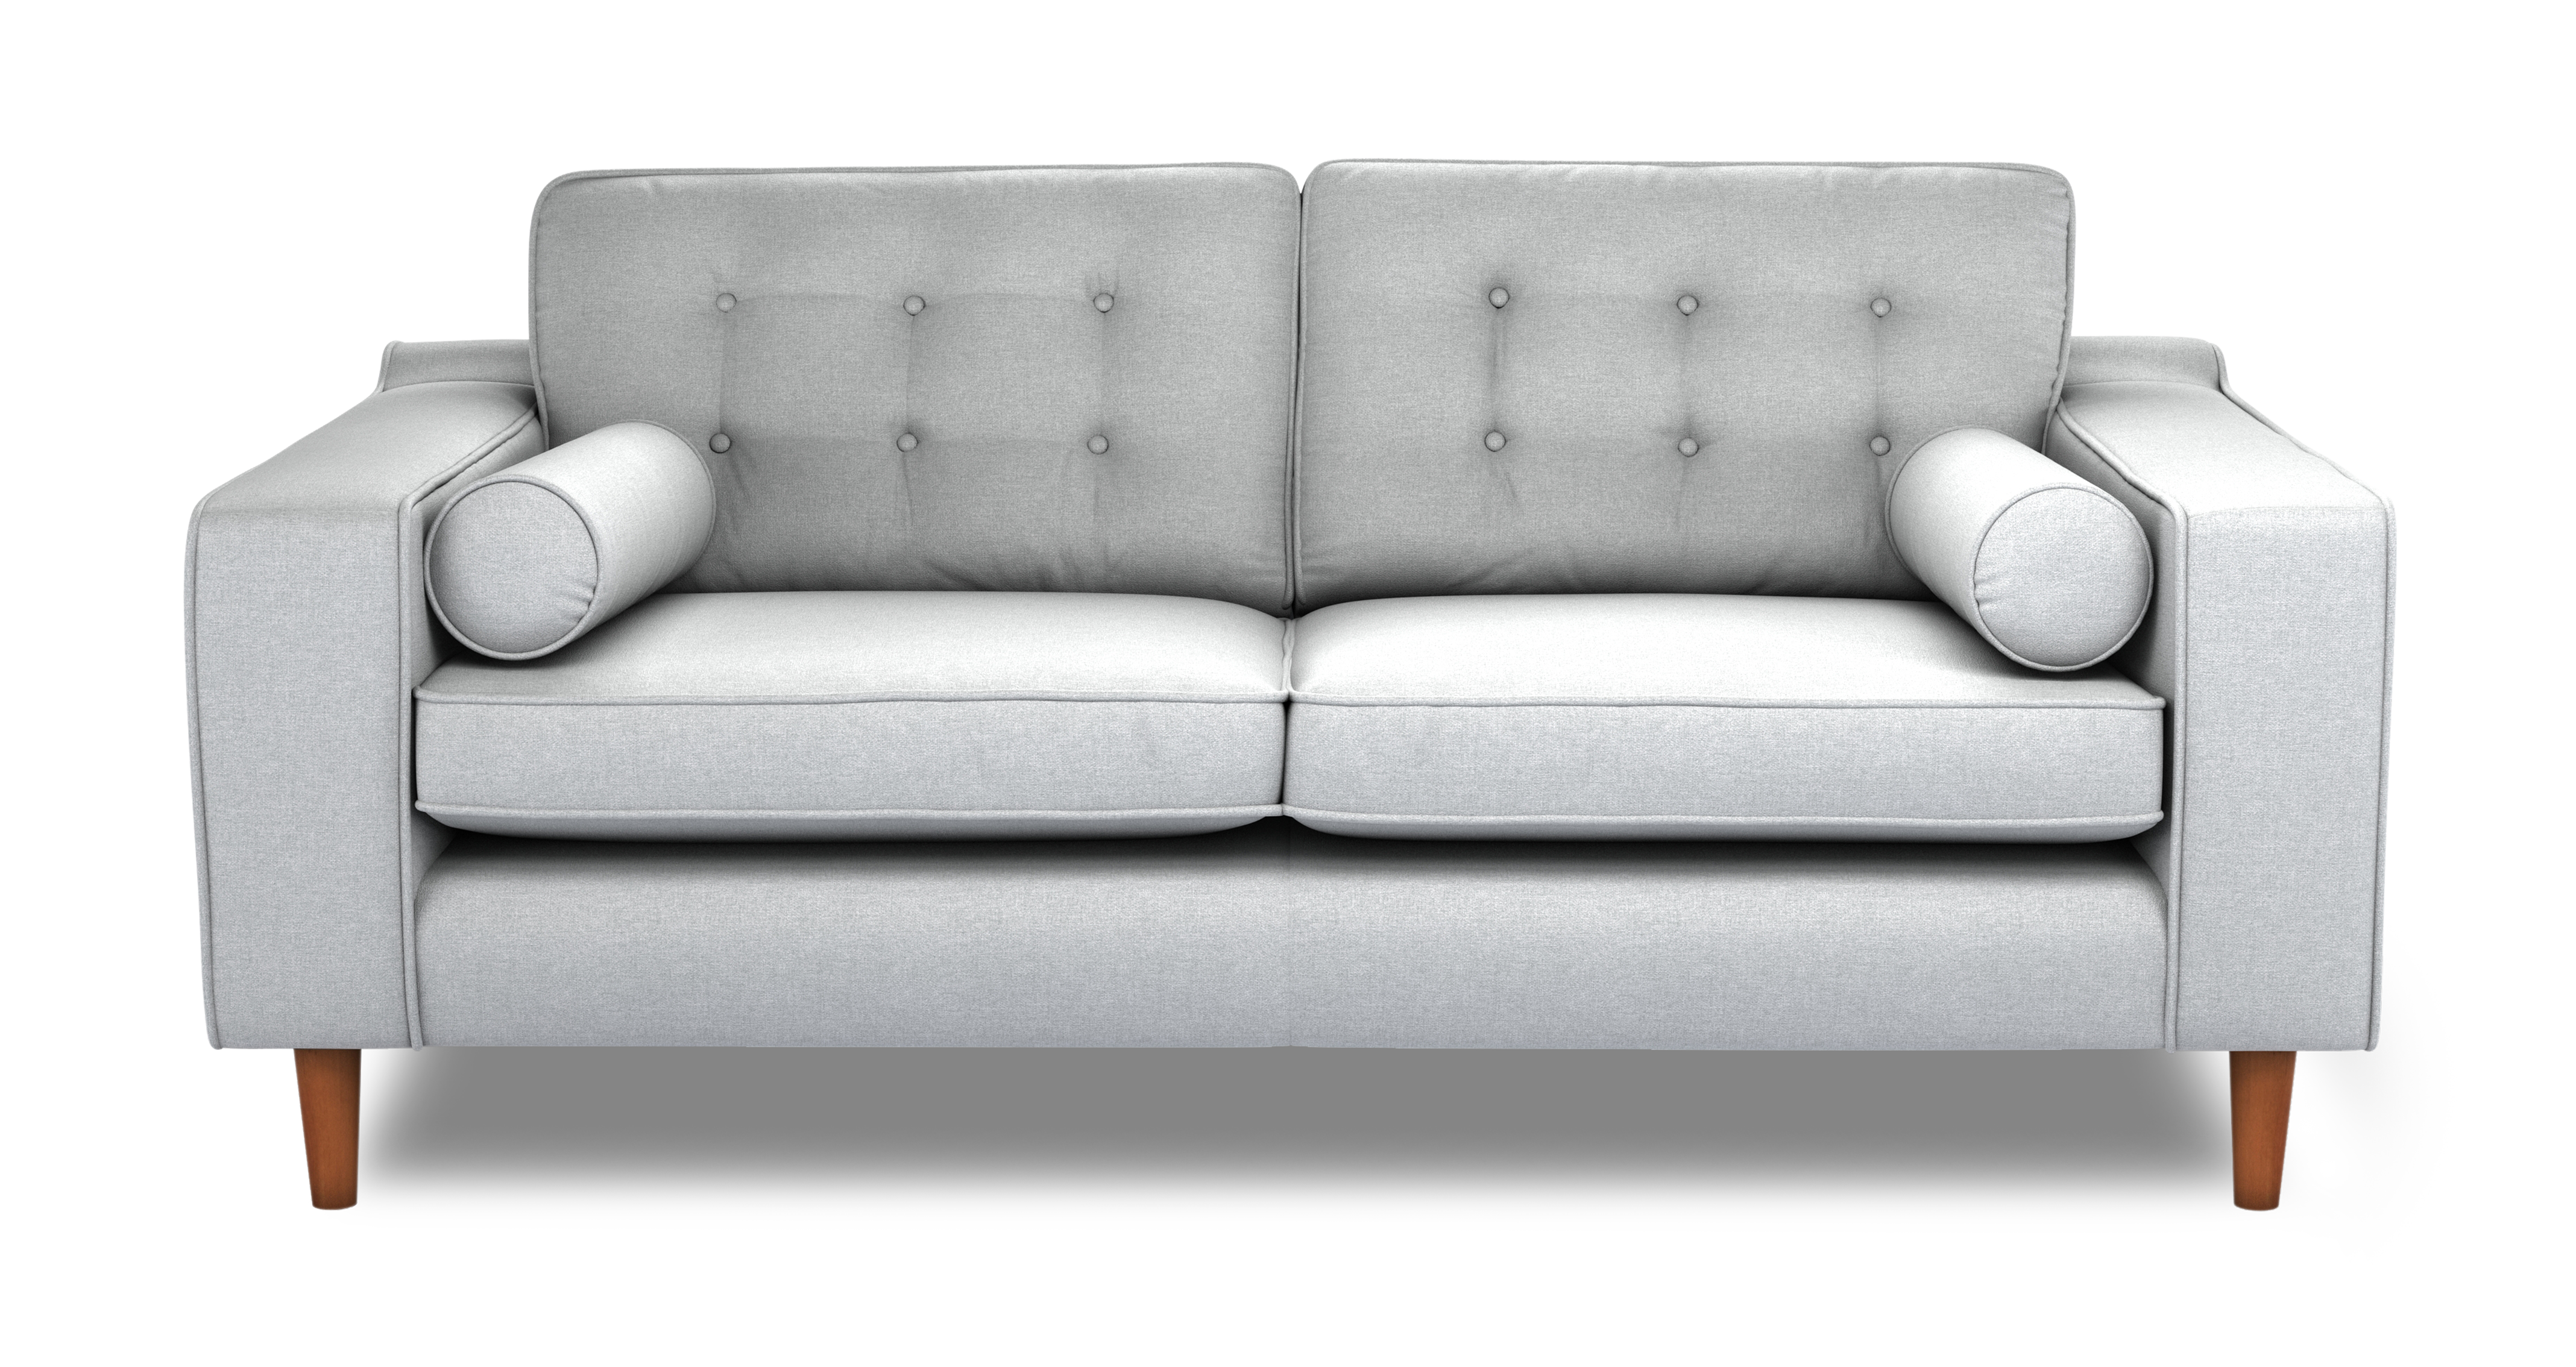 Sam 3 Seater Sofa